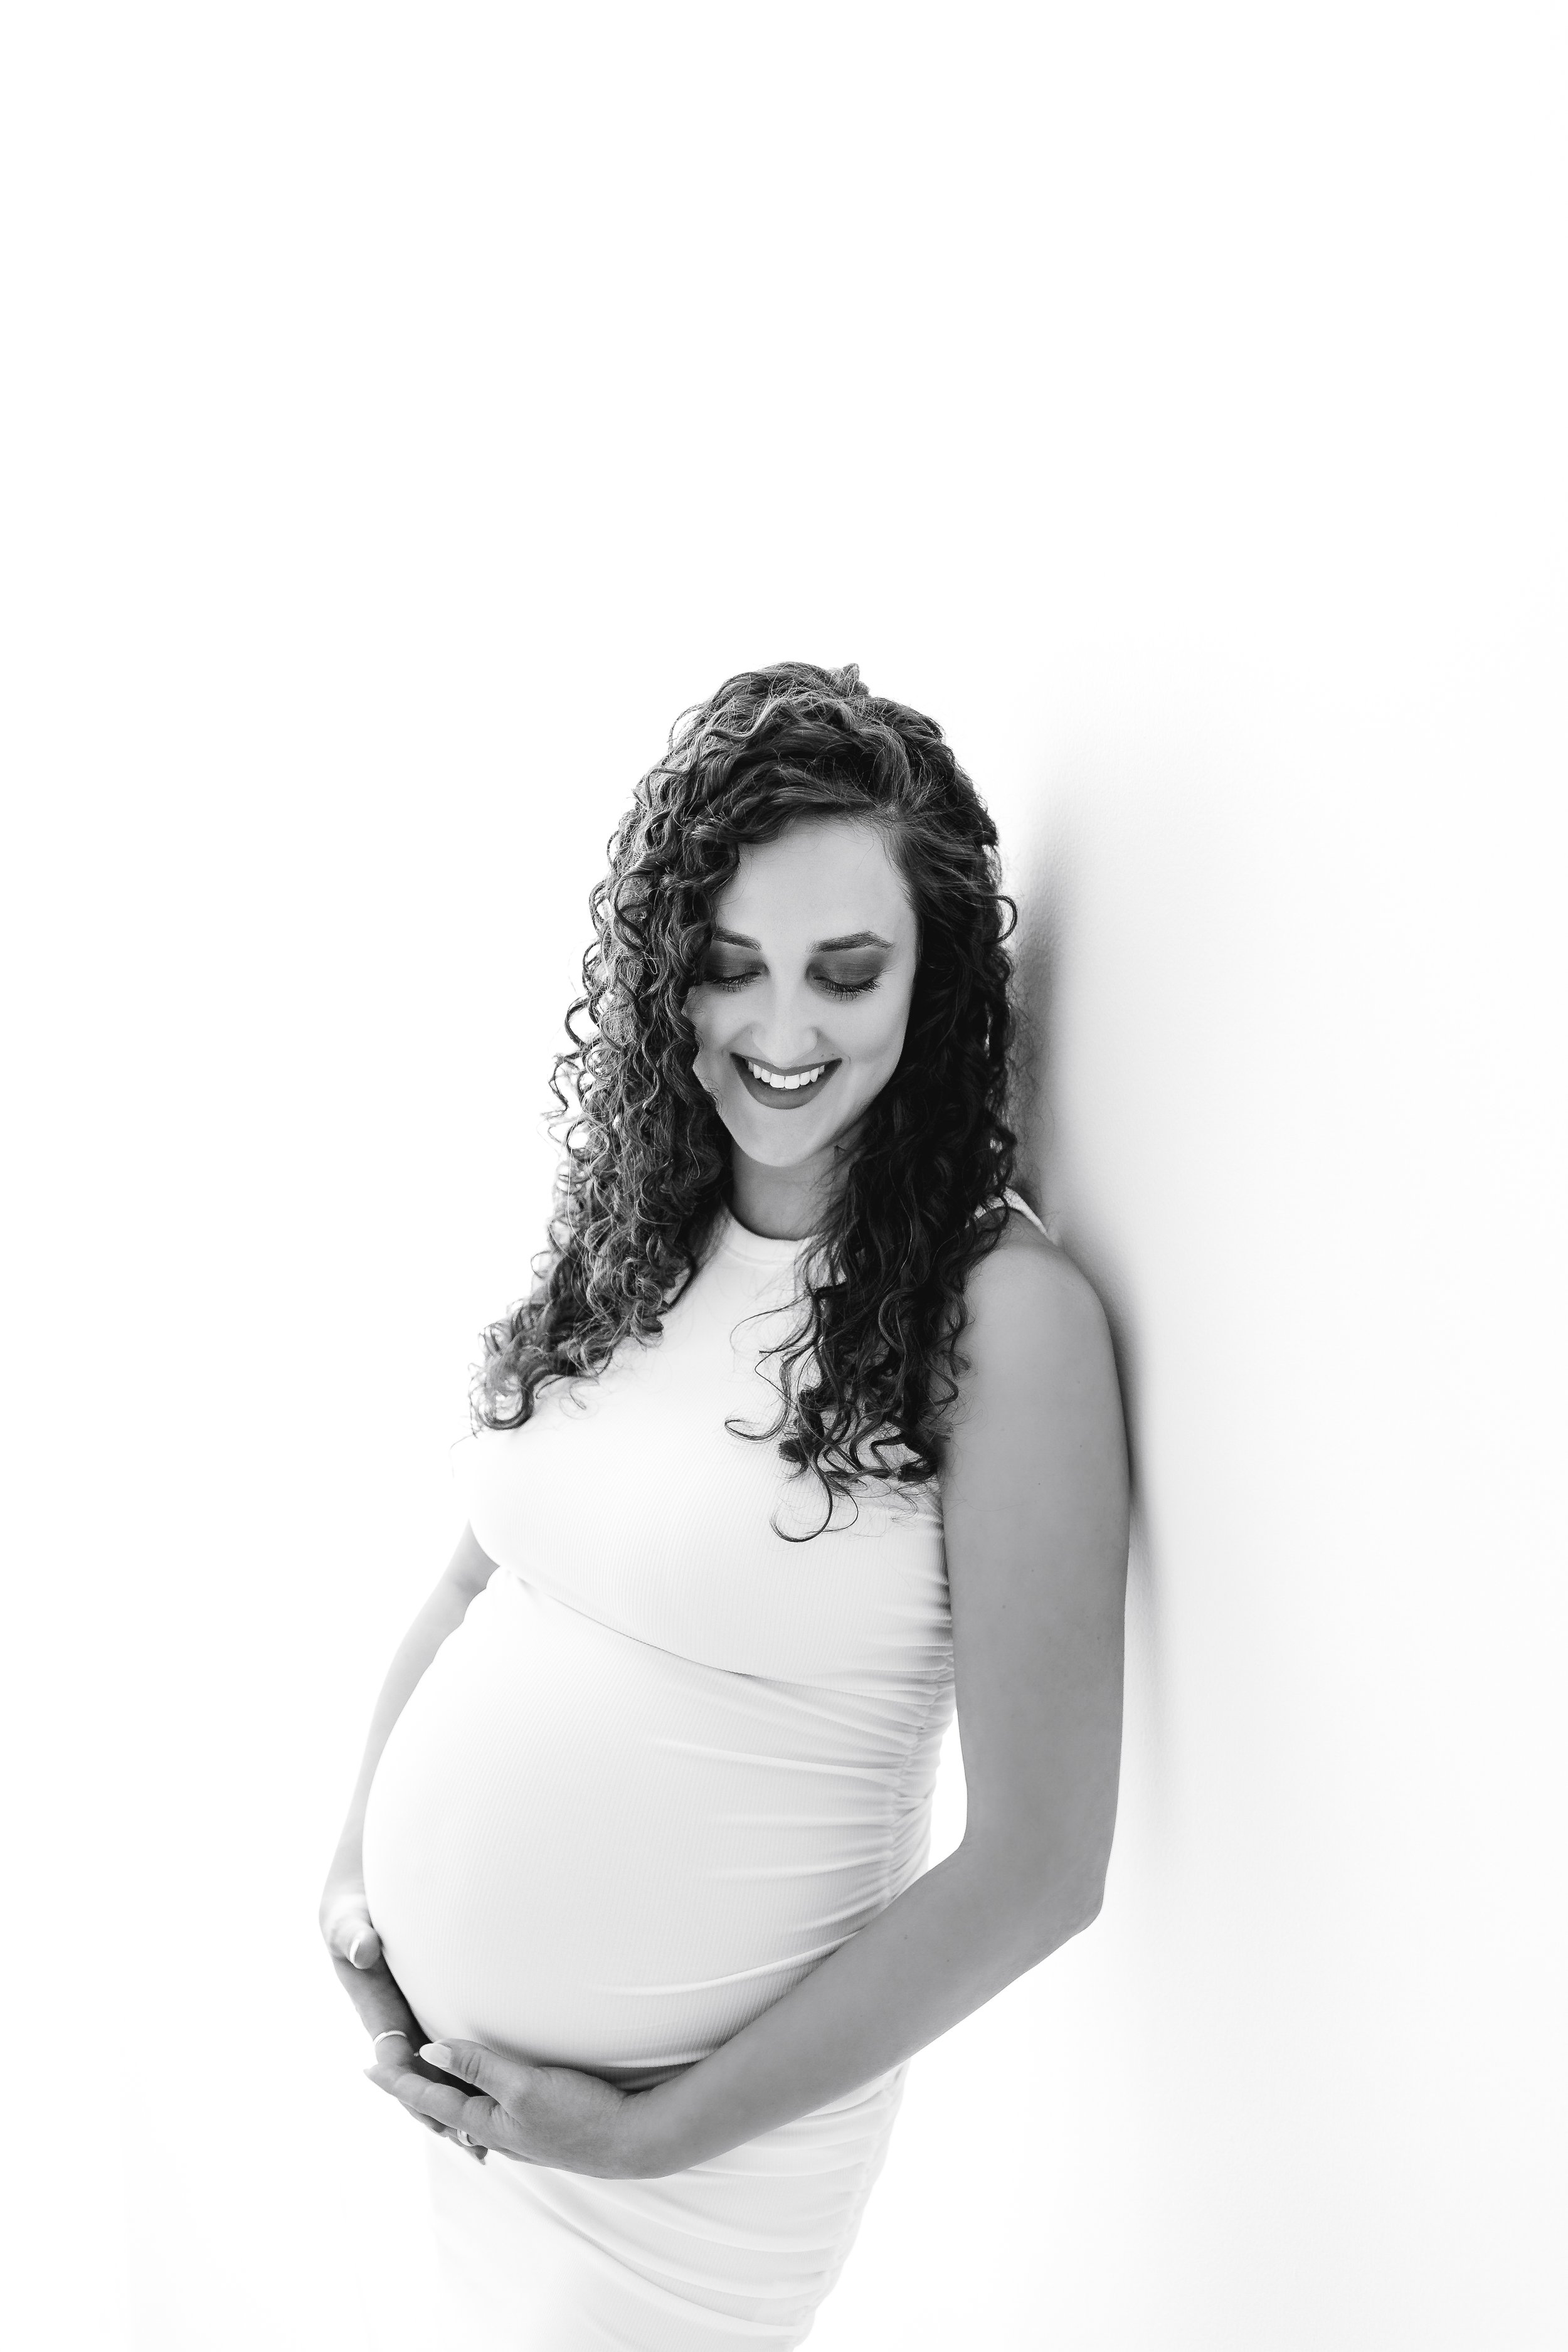 carlson-columbus-maternity-photographer-42.jpg